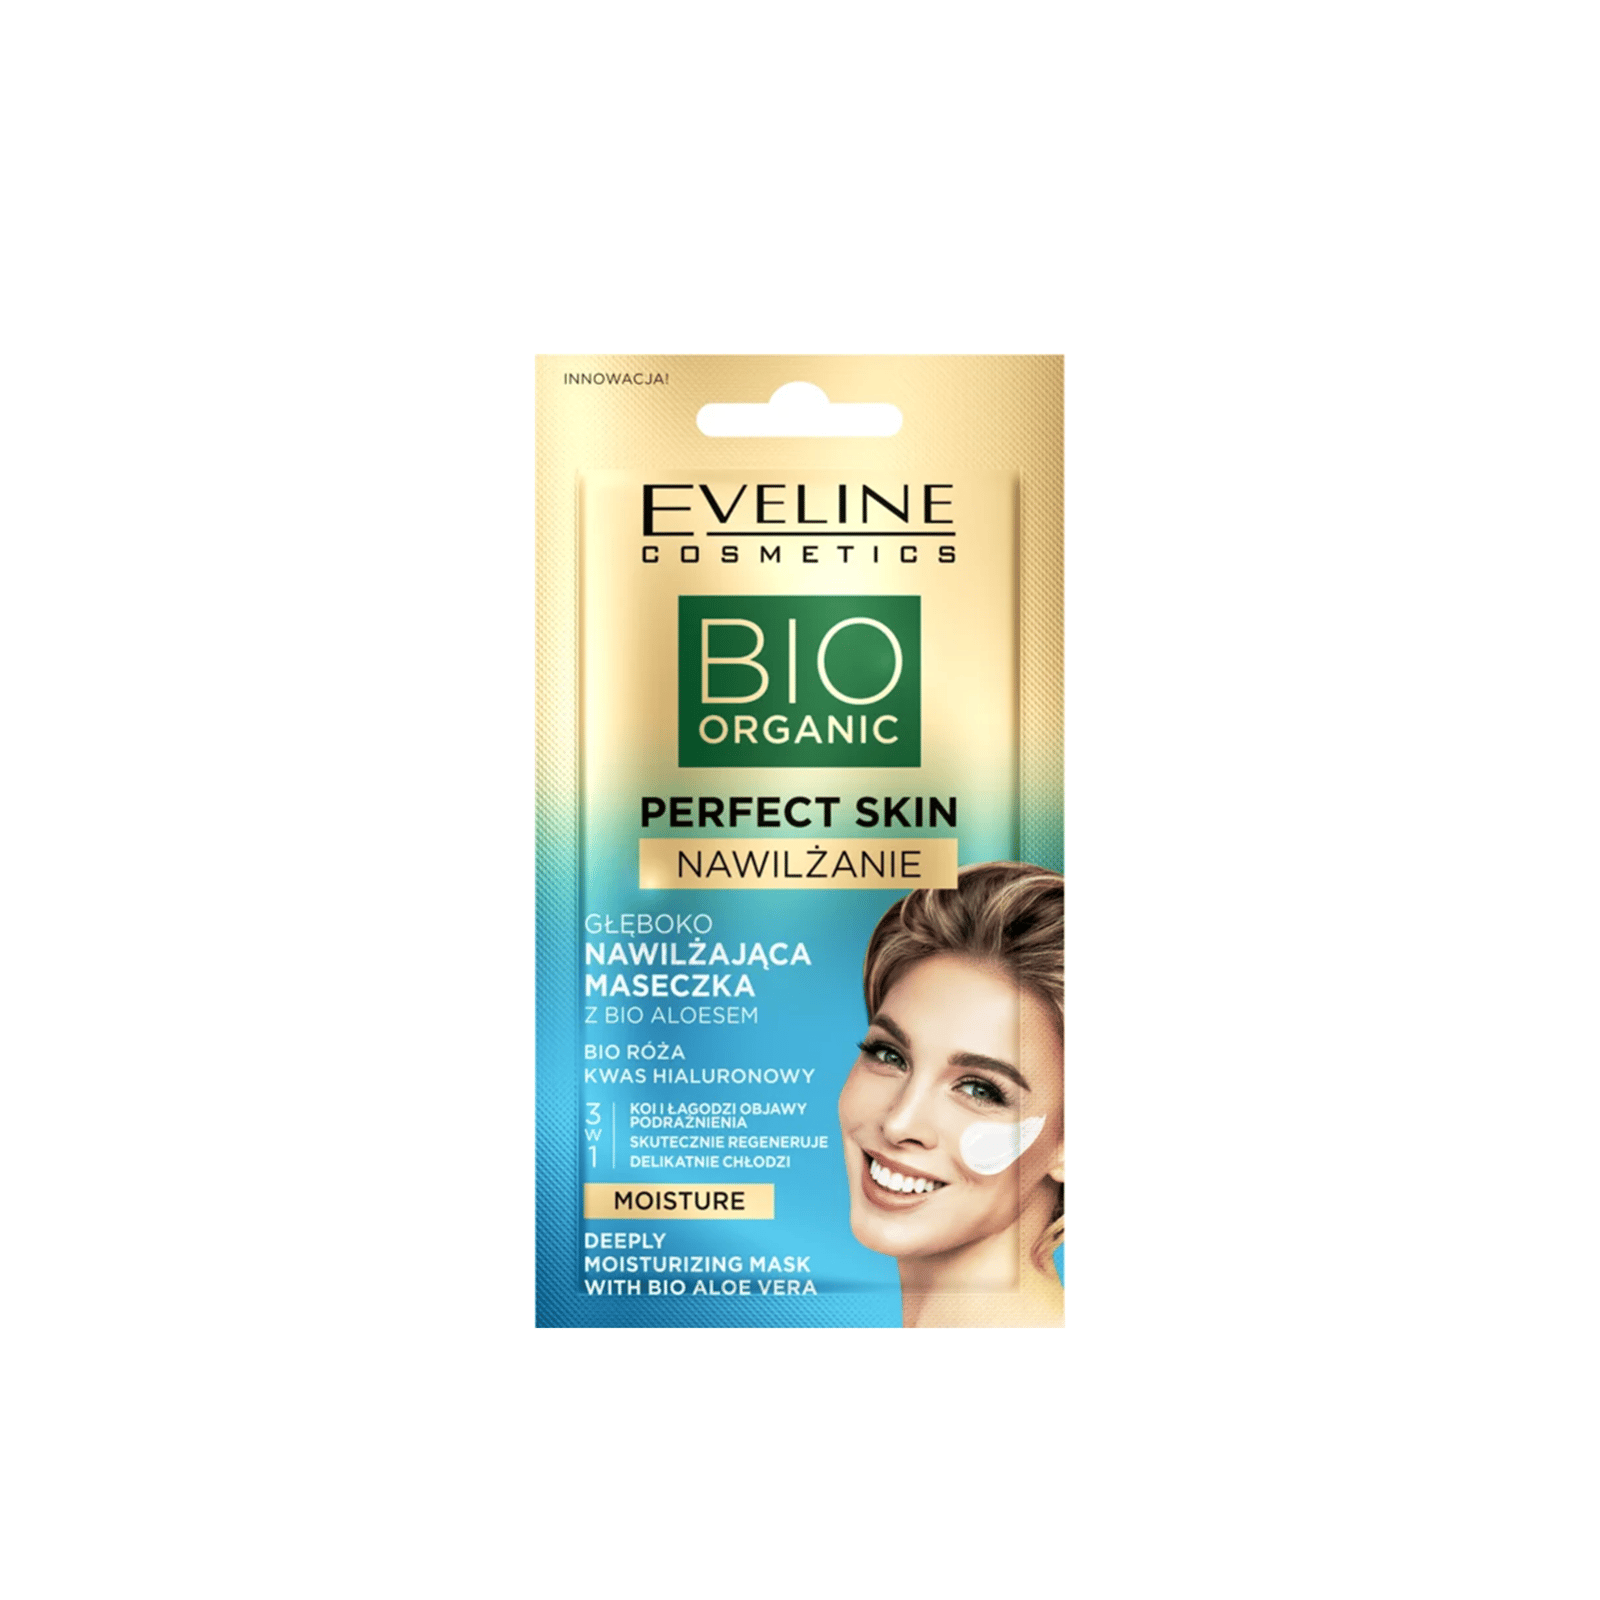 Eveline Cosmetics Bio Organic Perfect Skin Moisture Deeply Moisturizing Mask 8ml (0.28 fl oz)